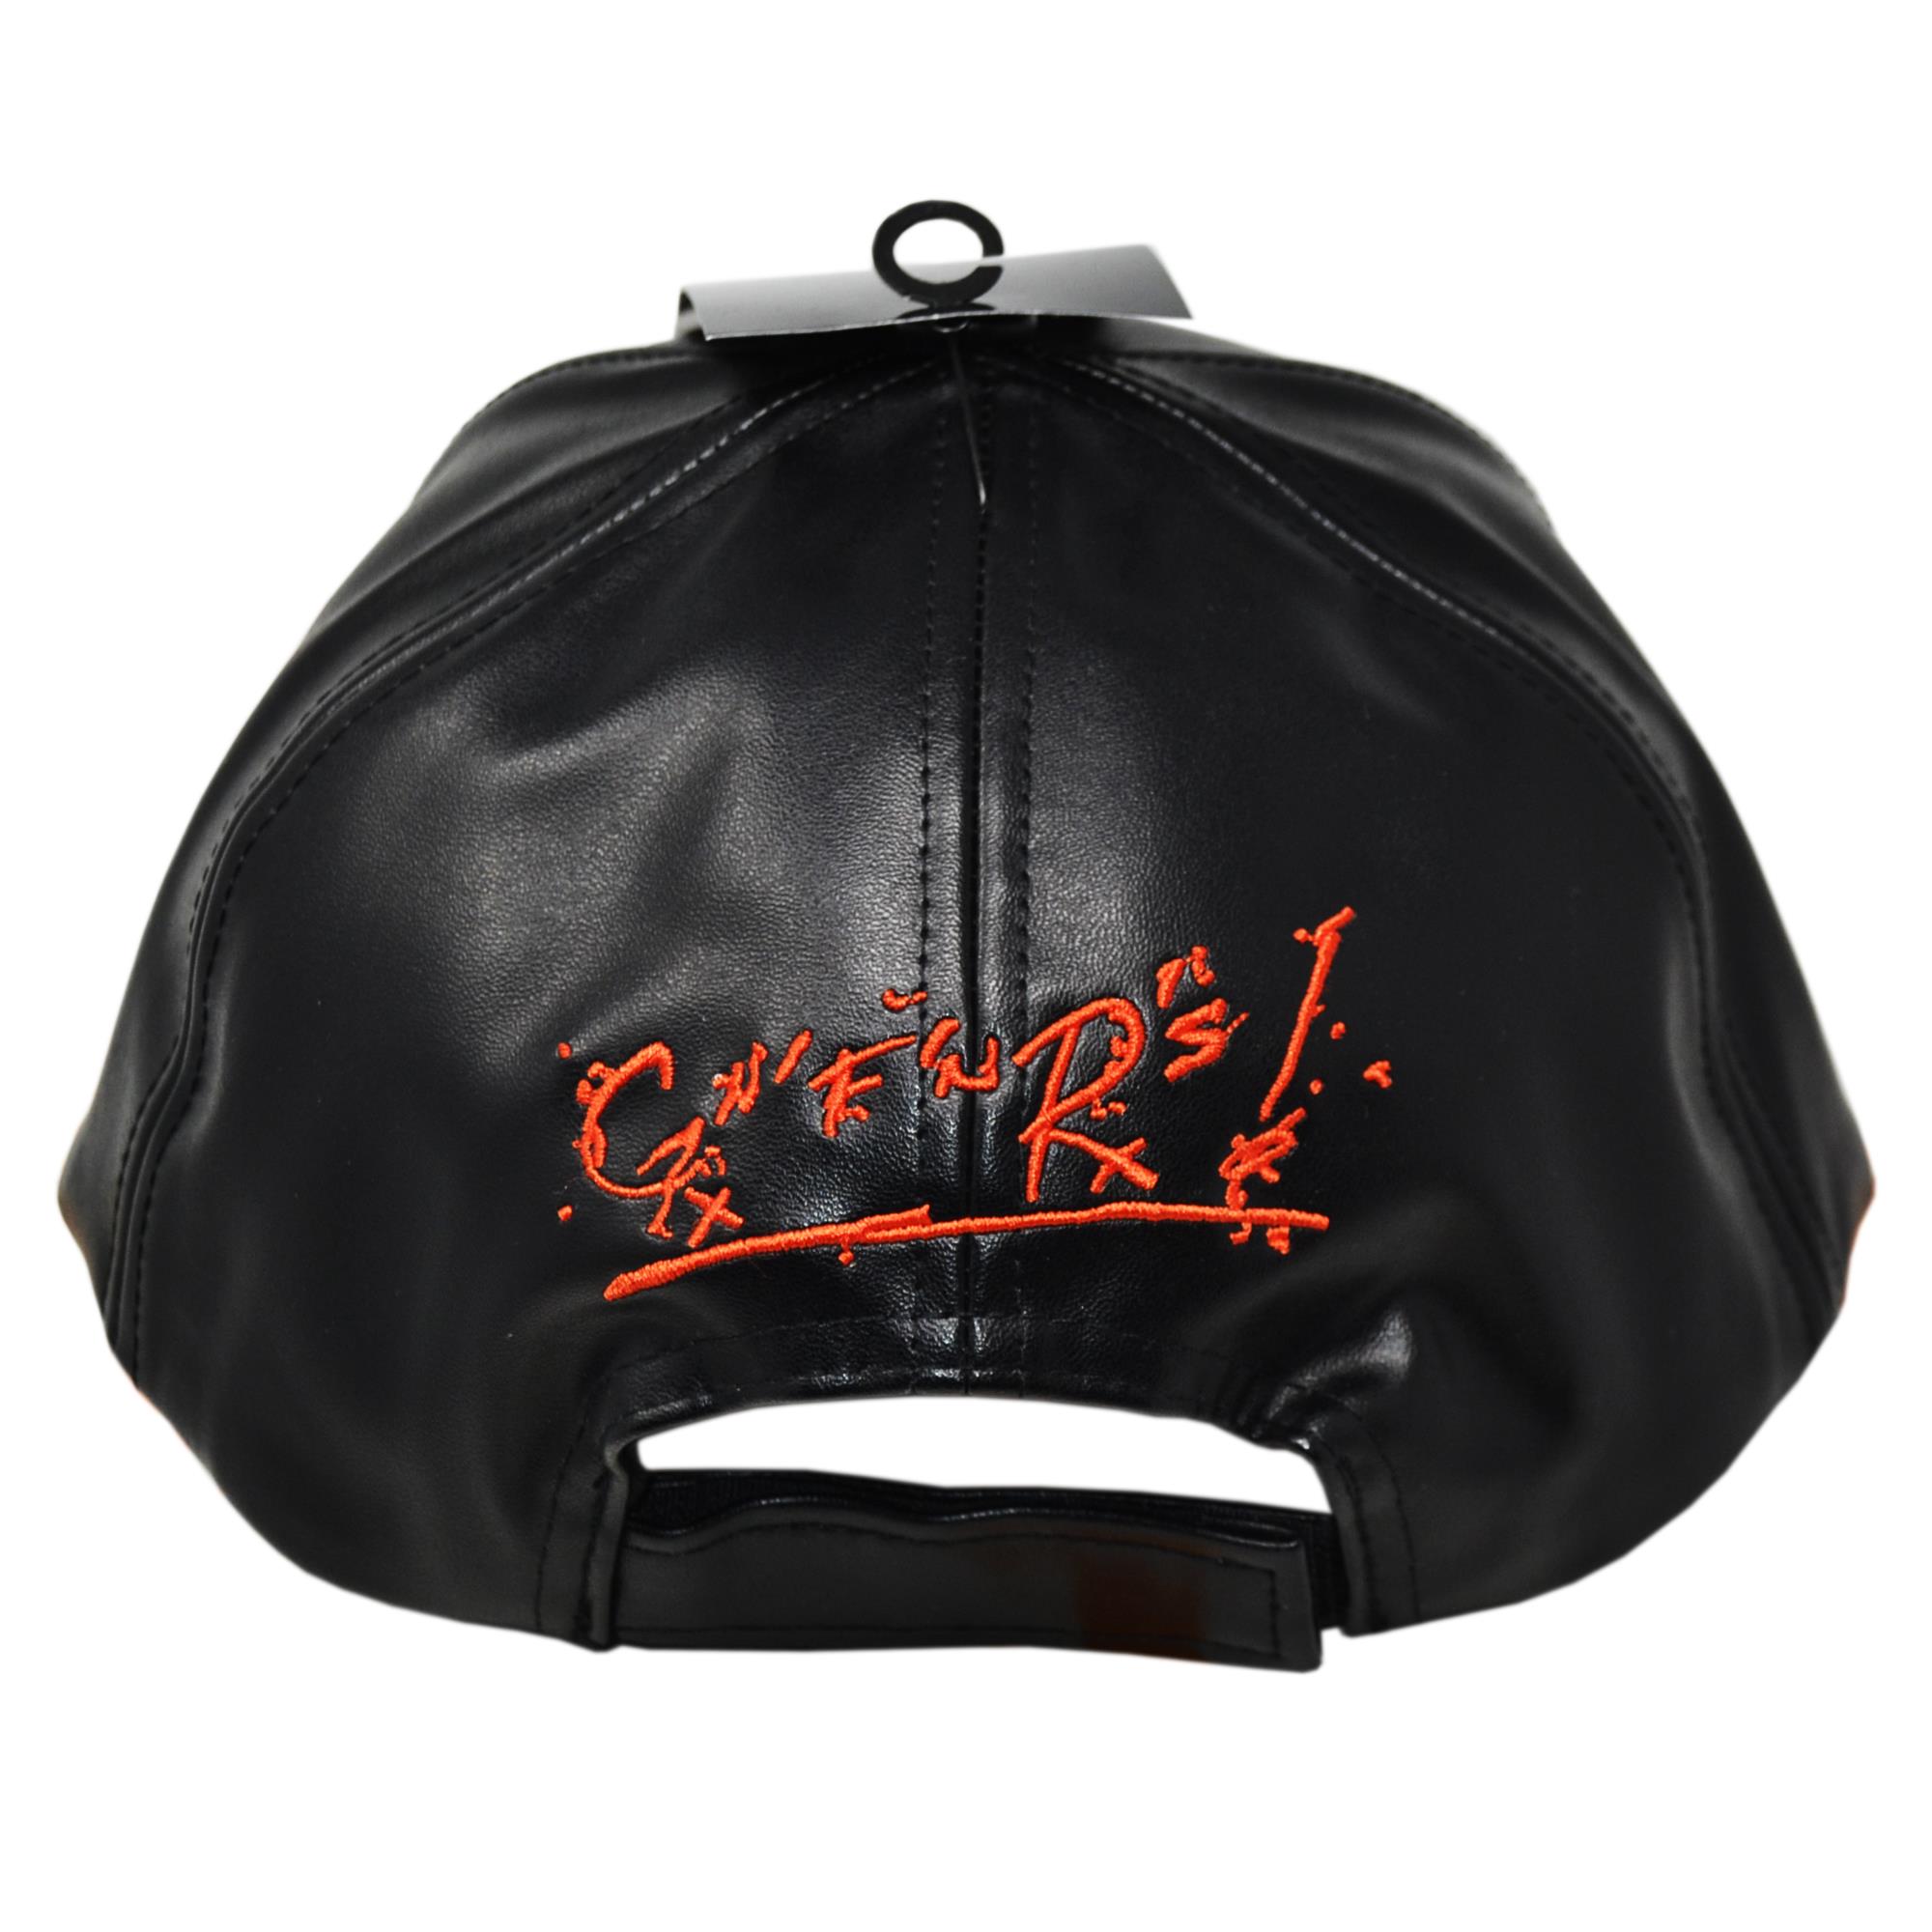 GNFNRS Imitation Leather Hat